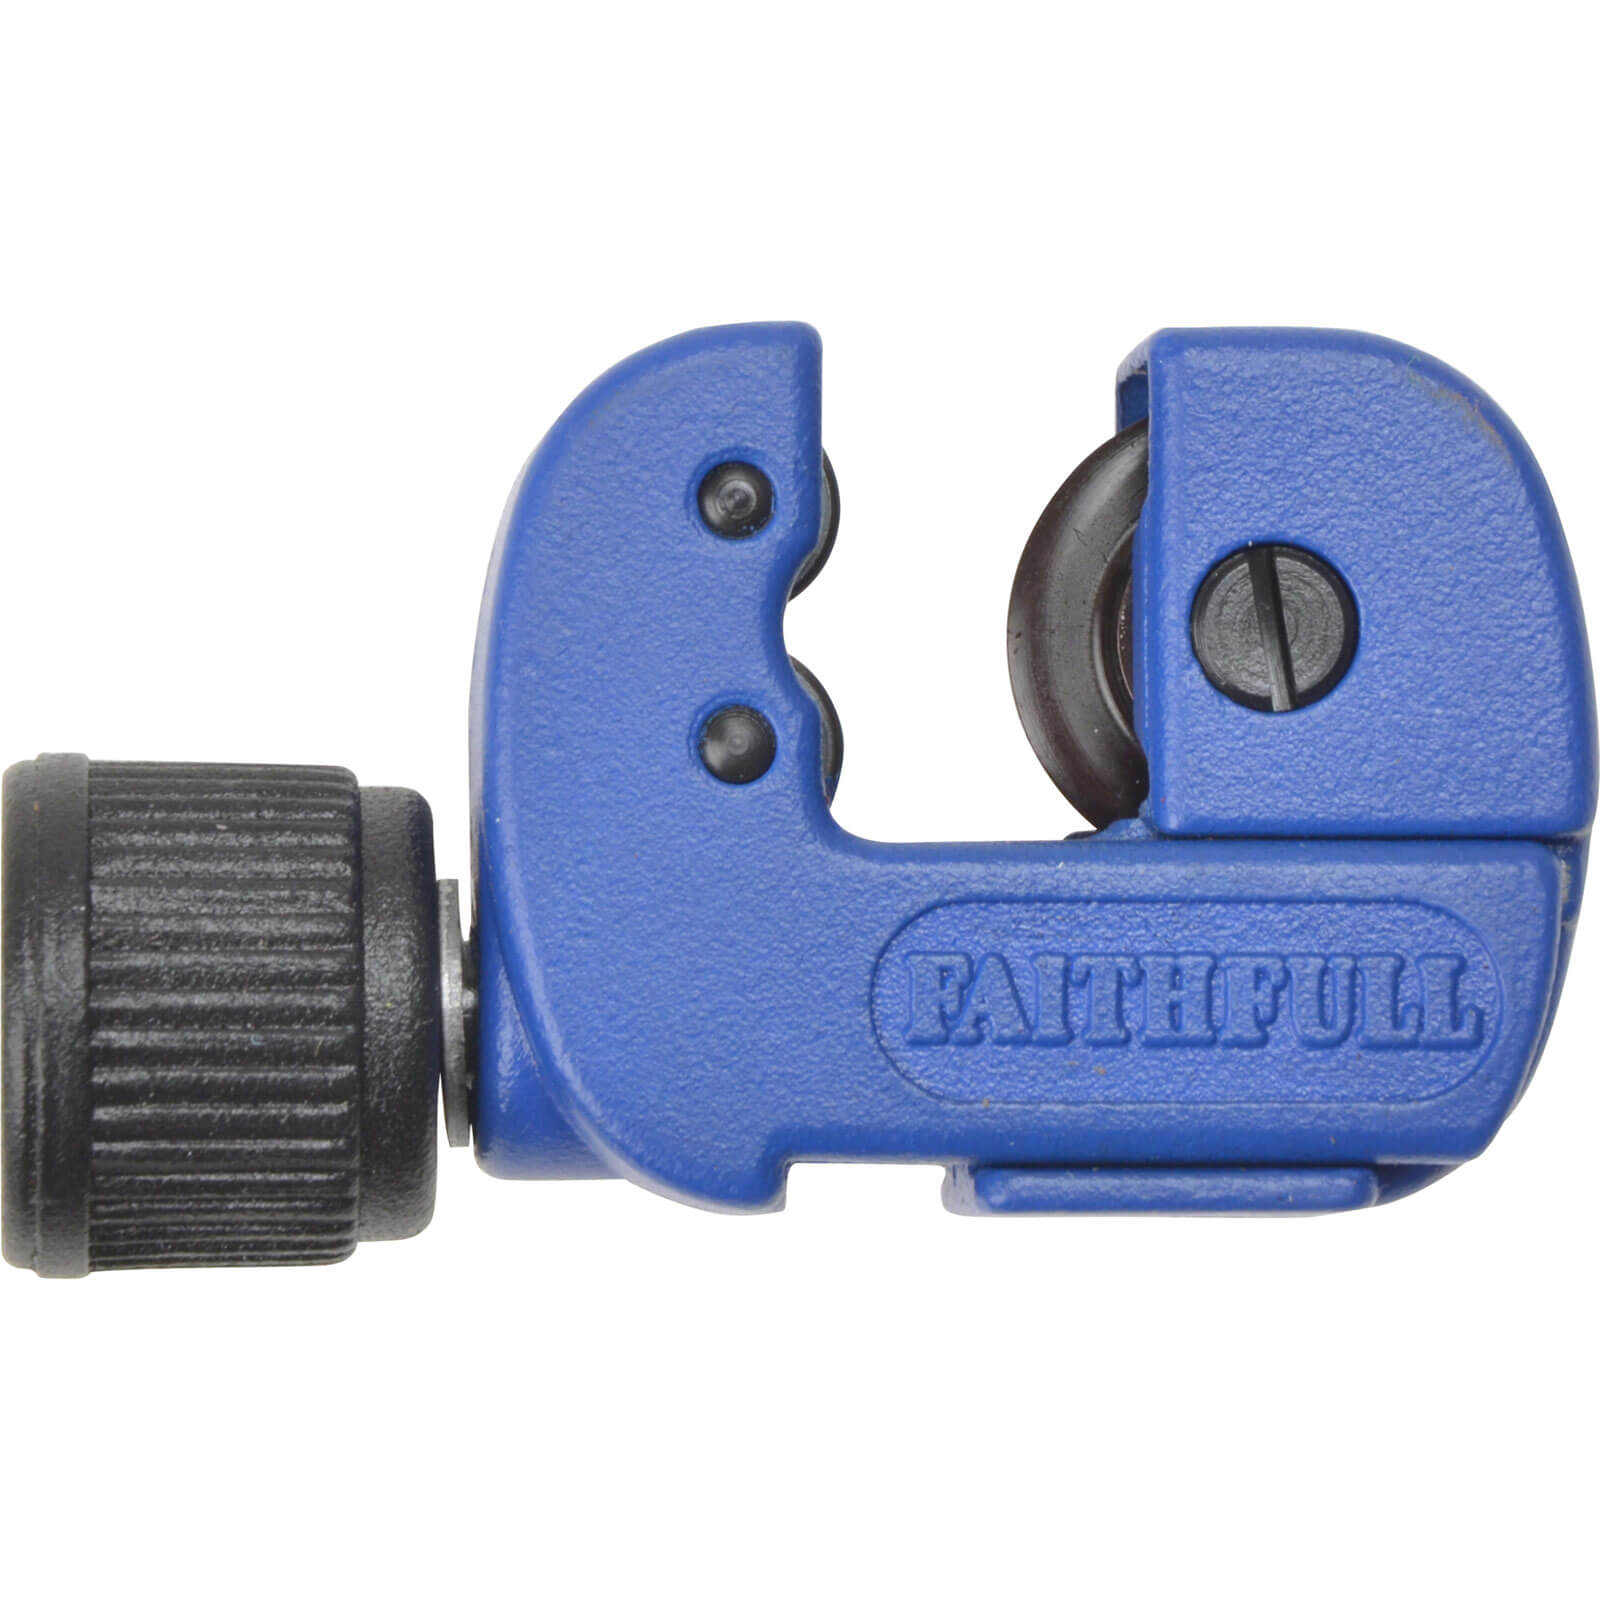 Faithfull Pc316 Pipe Cutter 3 - 16mm